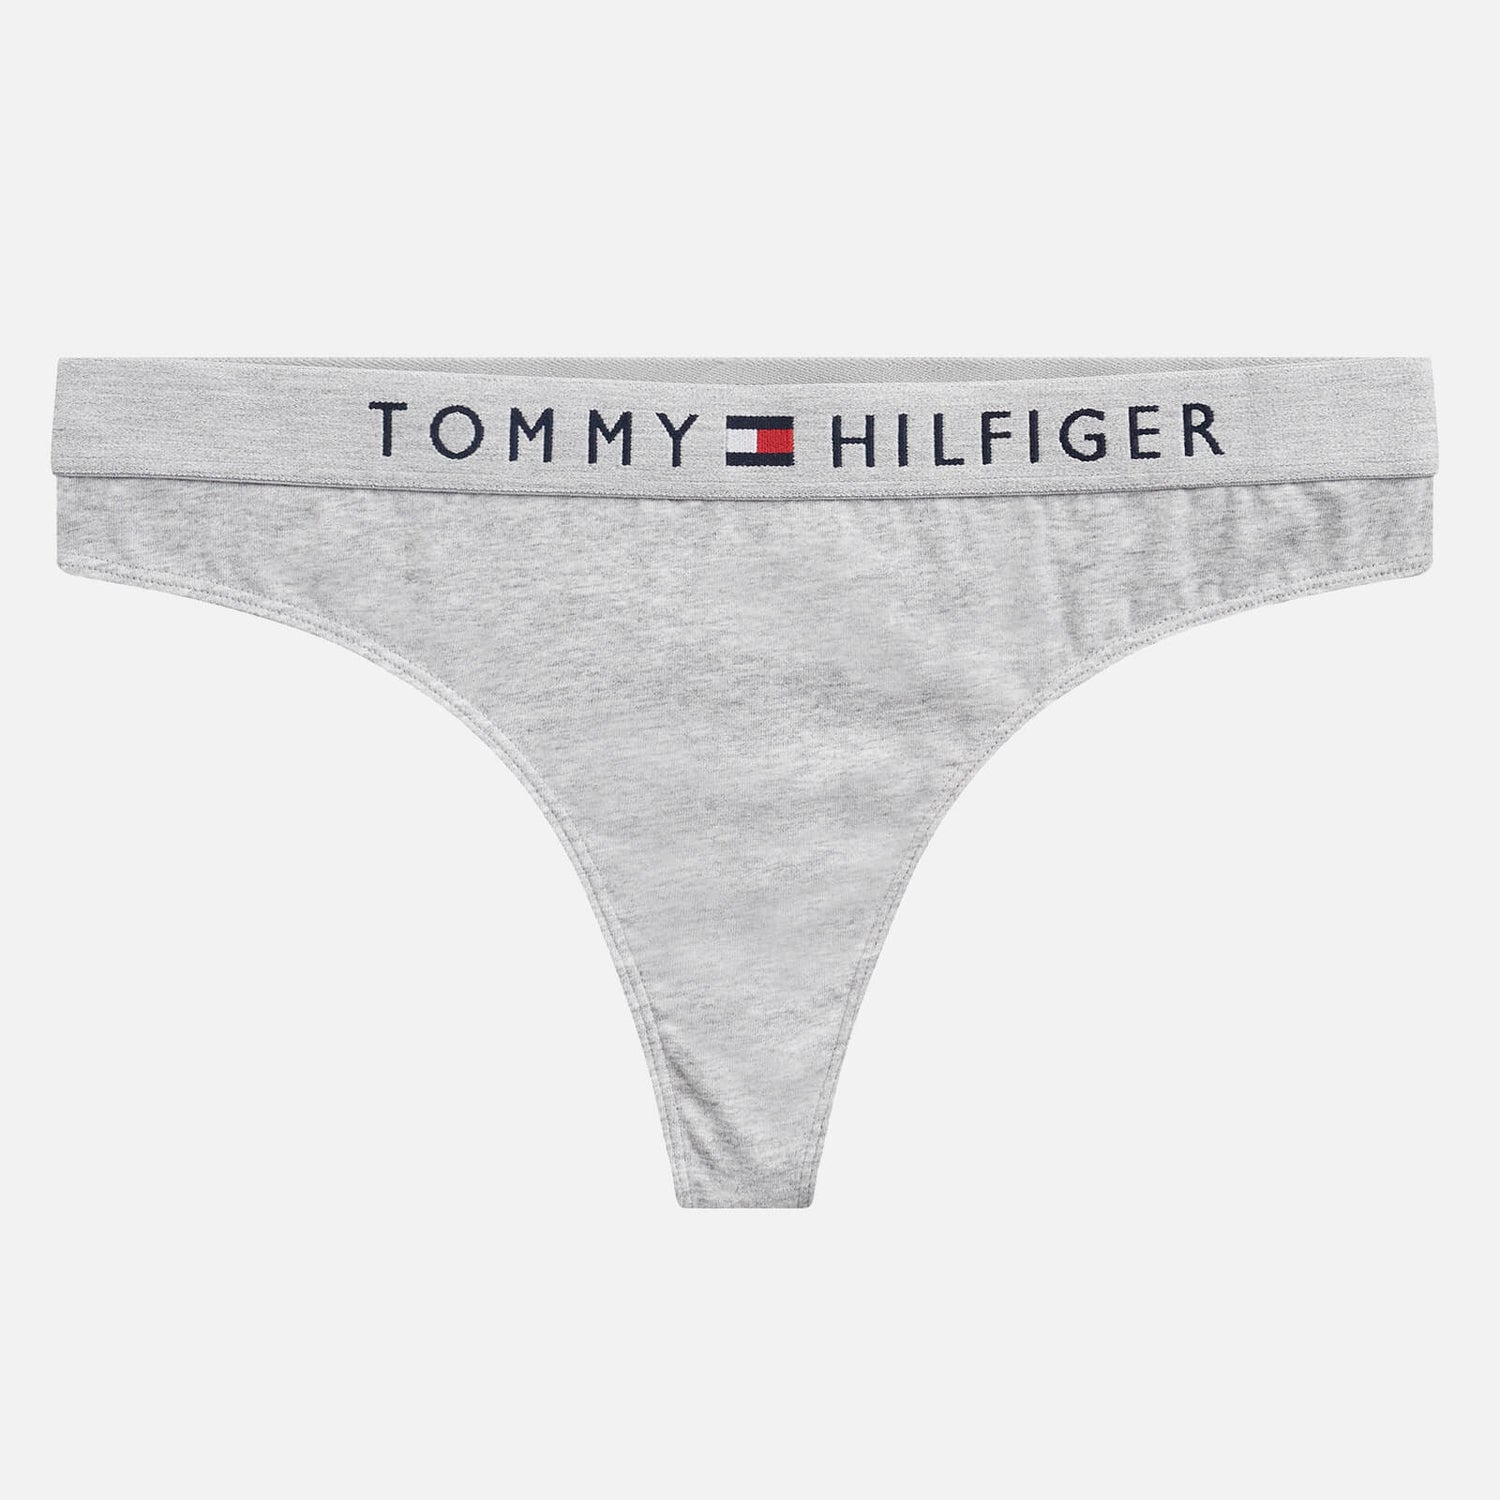 Tommy Hilfiger Women's Original Cotton Thong - Grey Heather